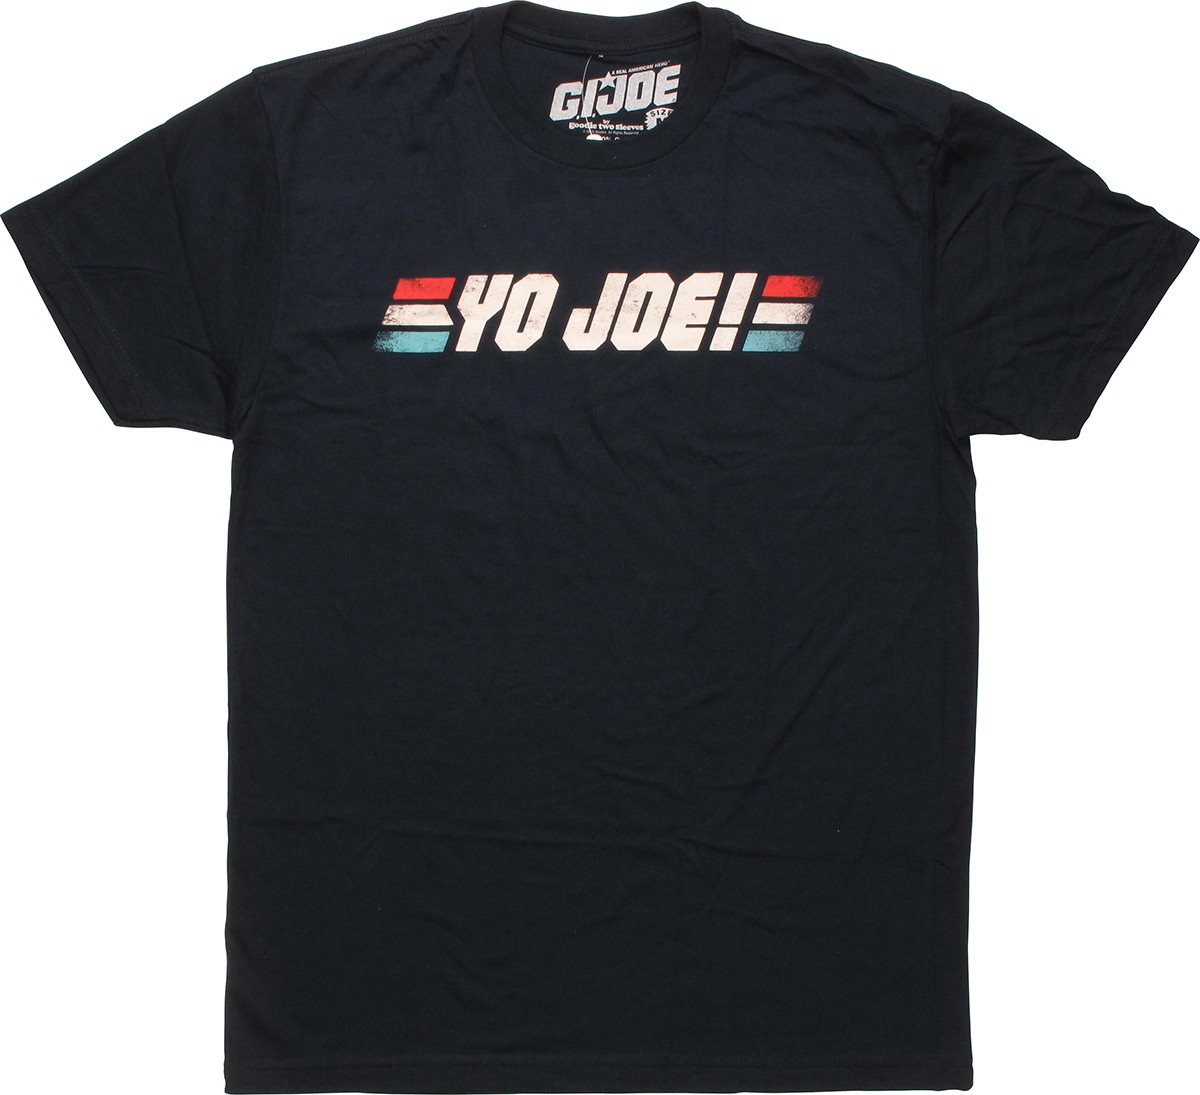 G.I Joe Yo Joe shirt